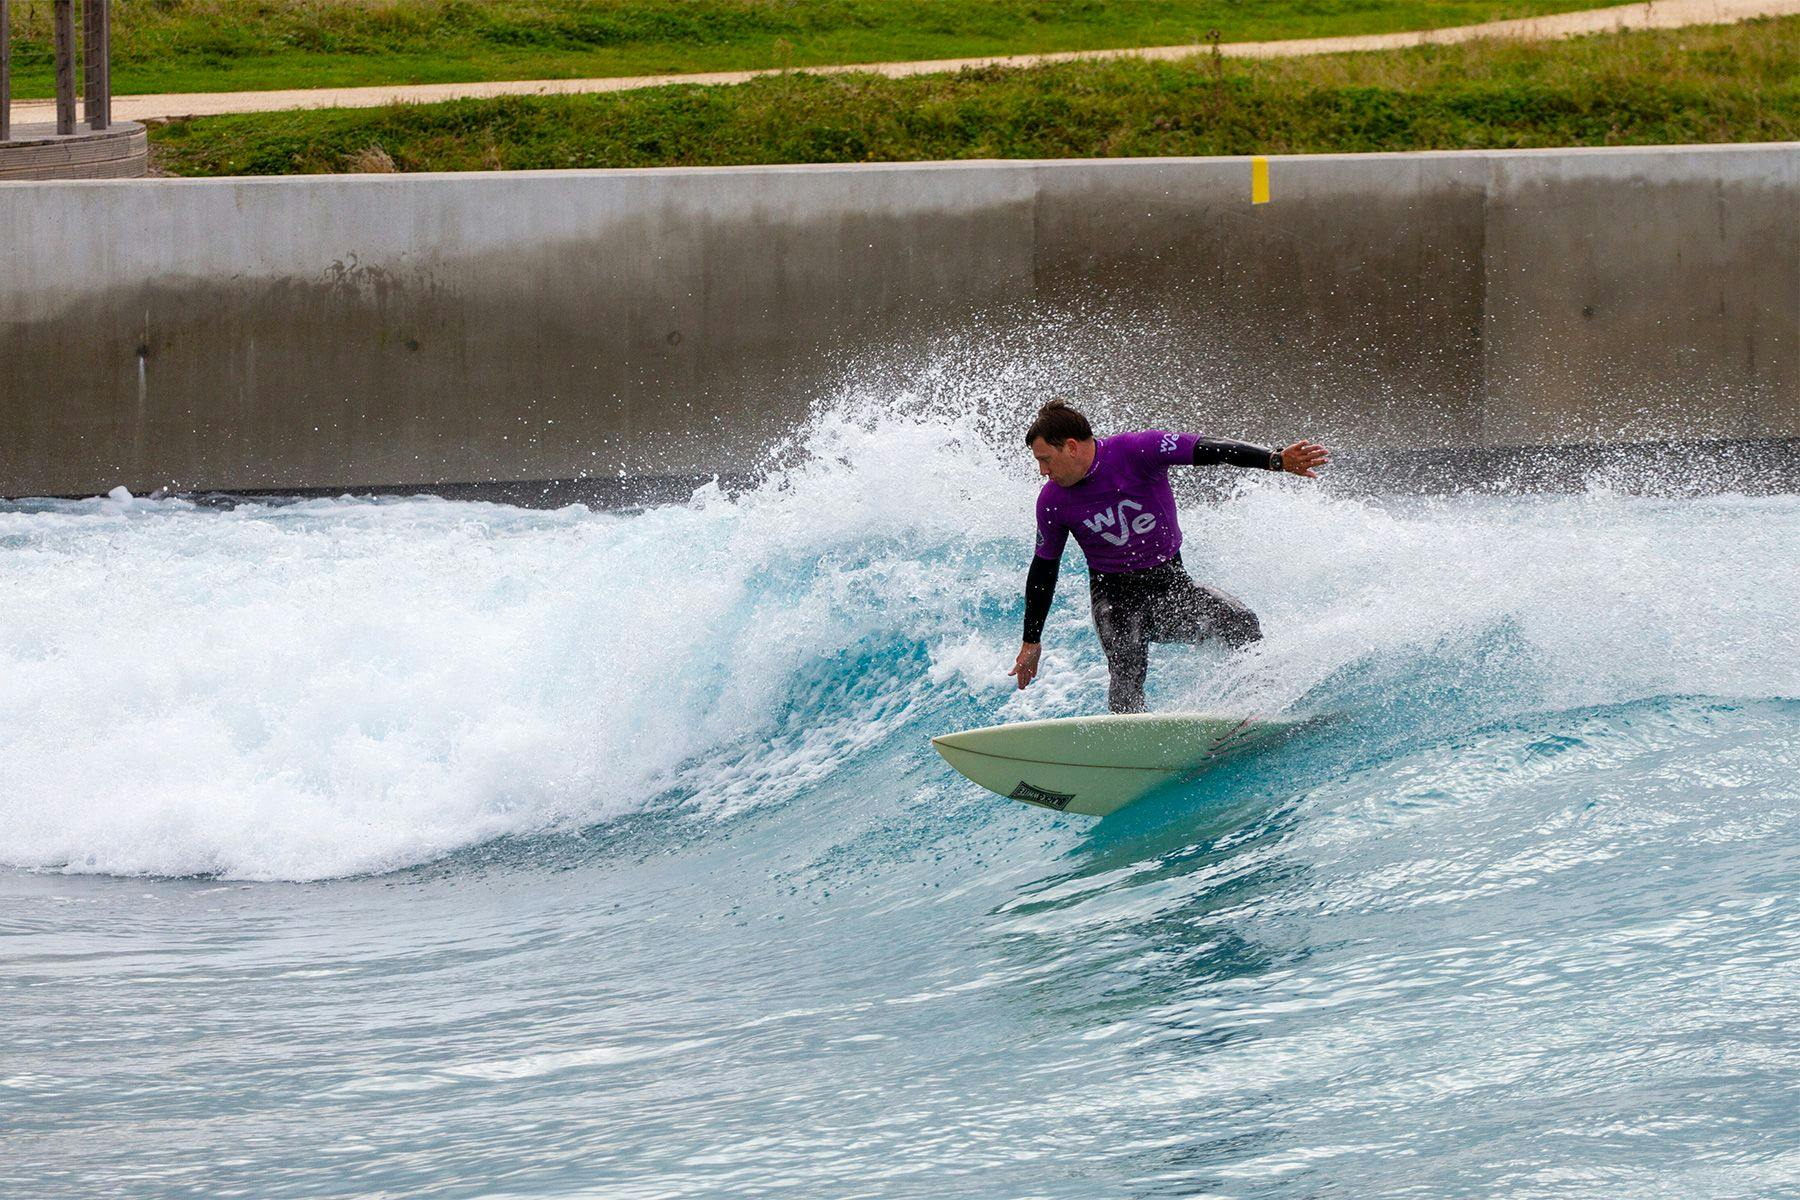 harry knight surfing at the wave inland surf destination in Bristol, UK